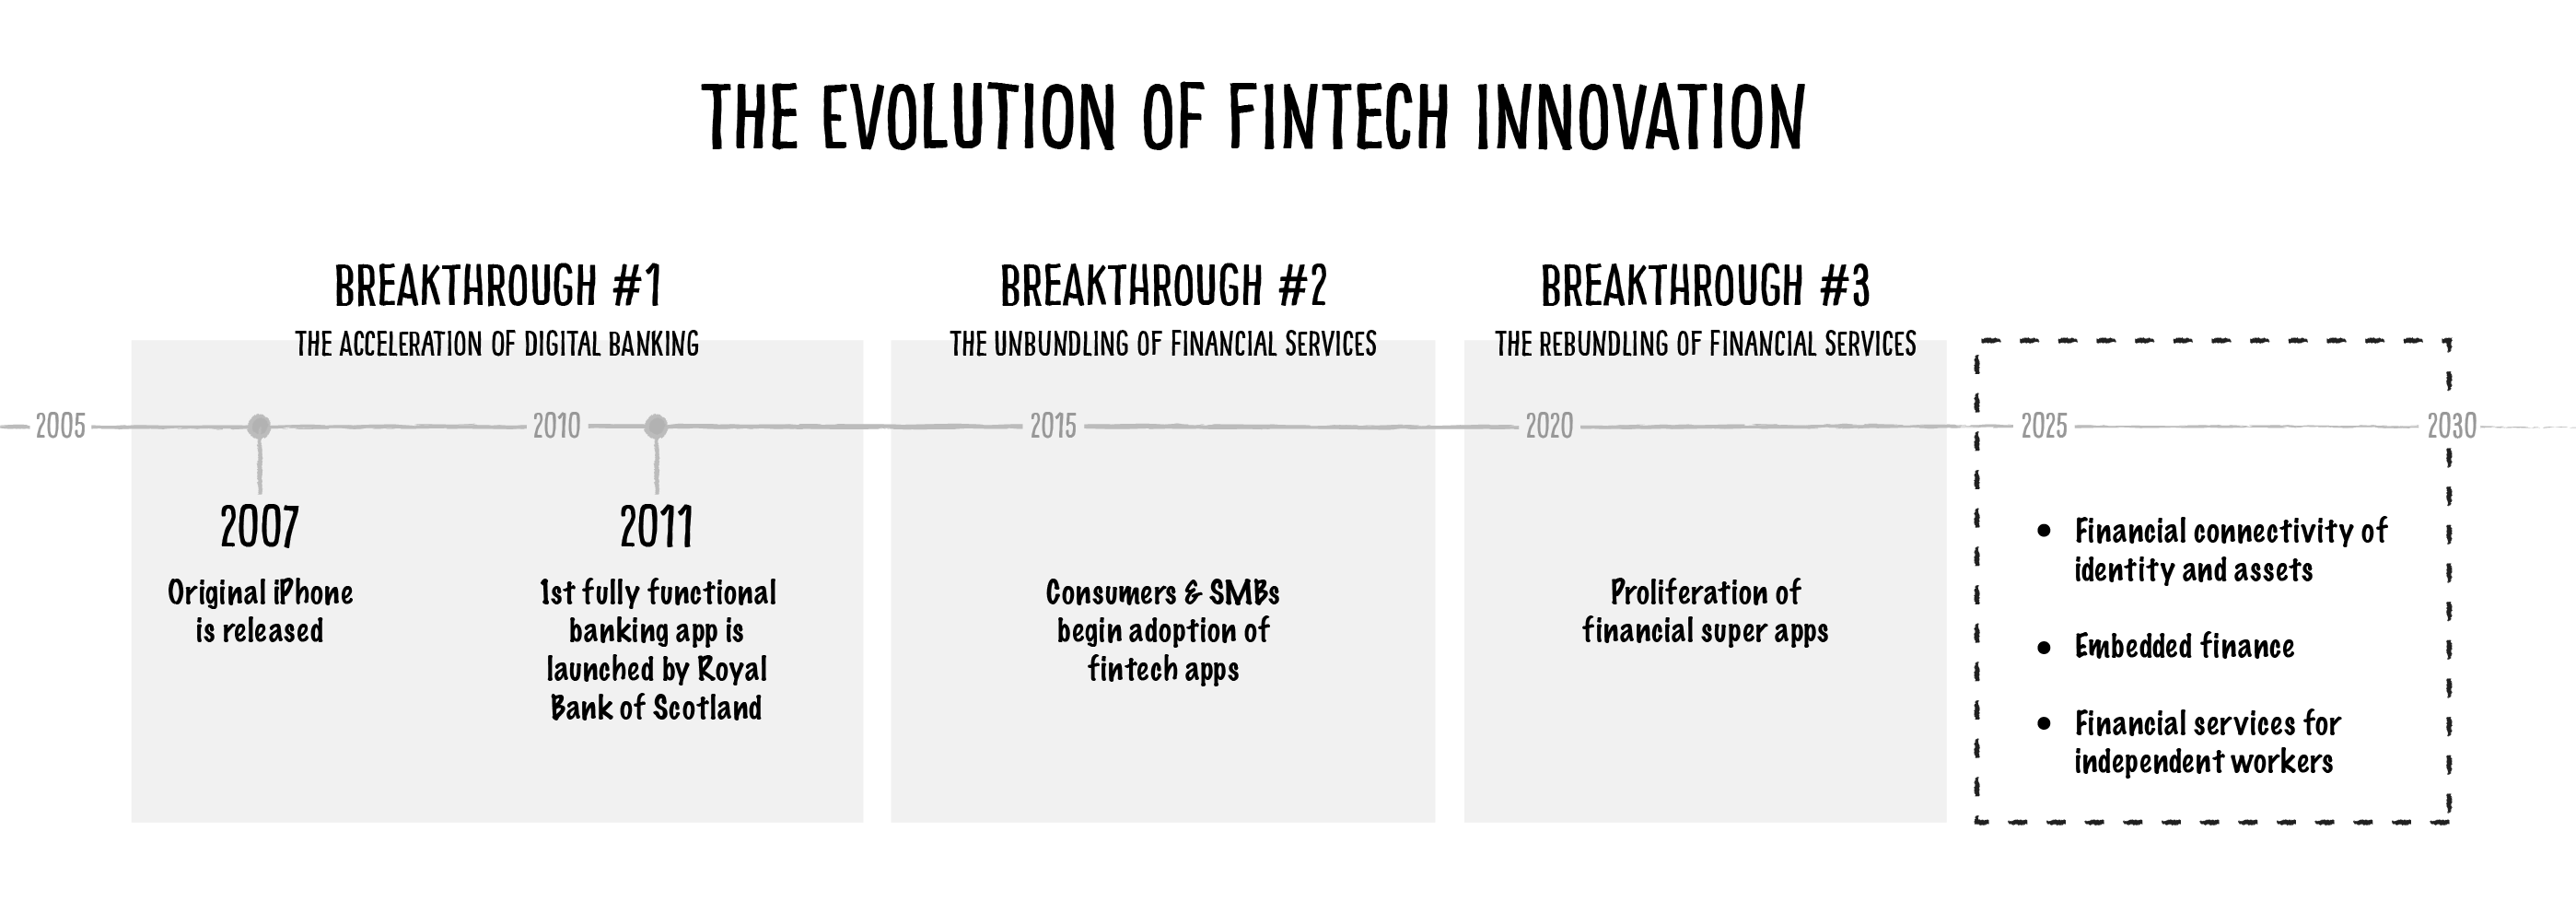 The Evolution of Fintech Innovation